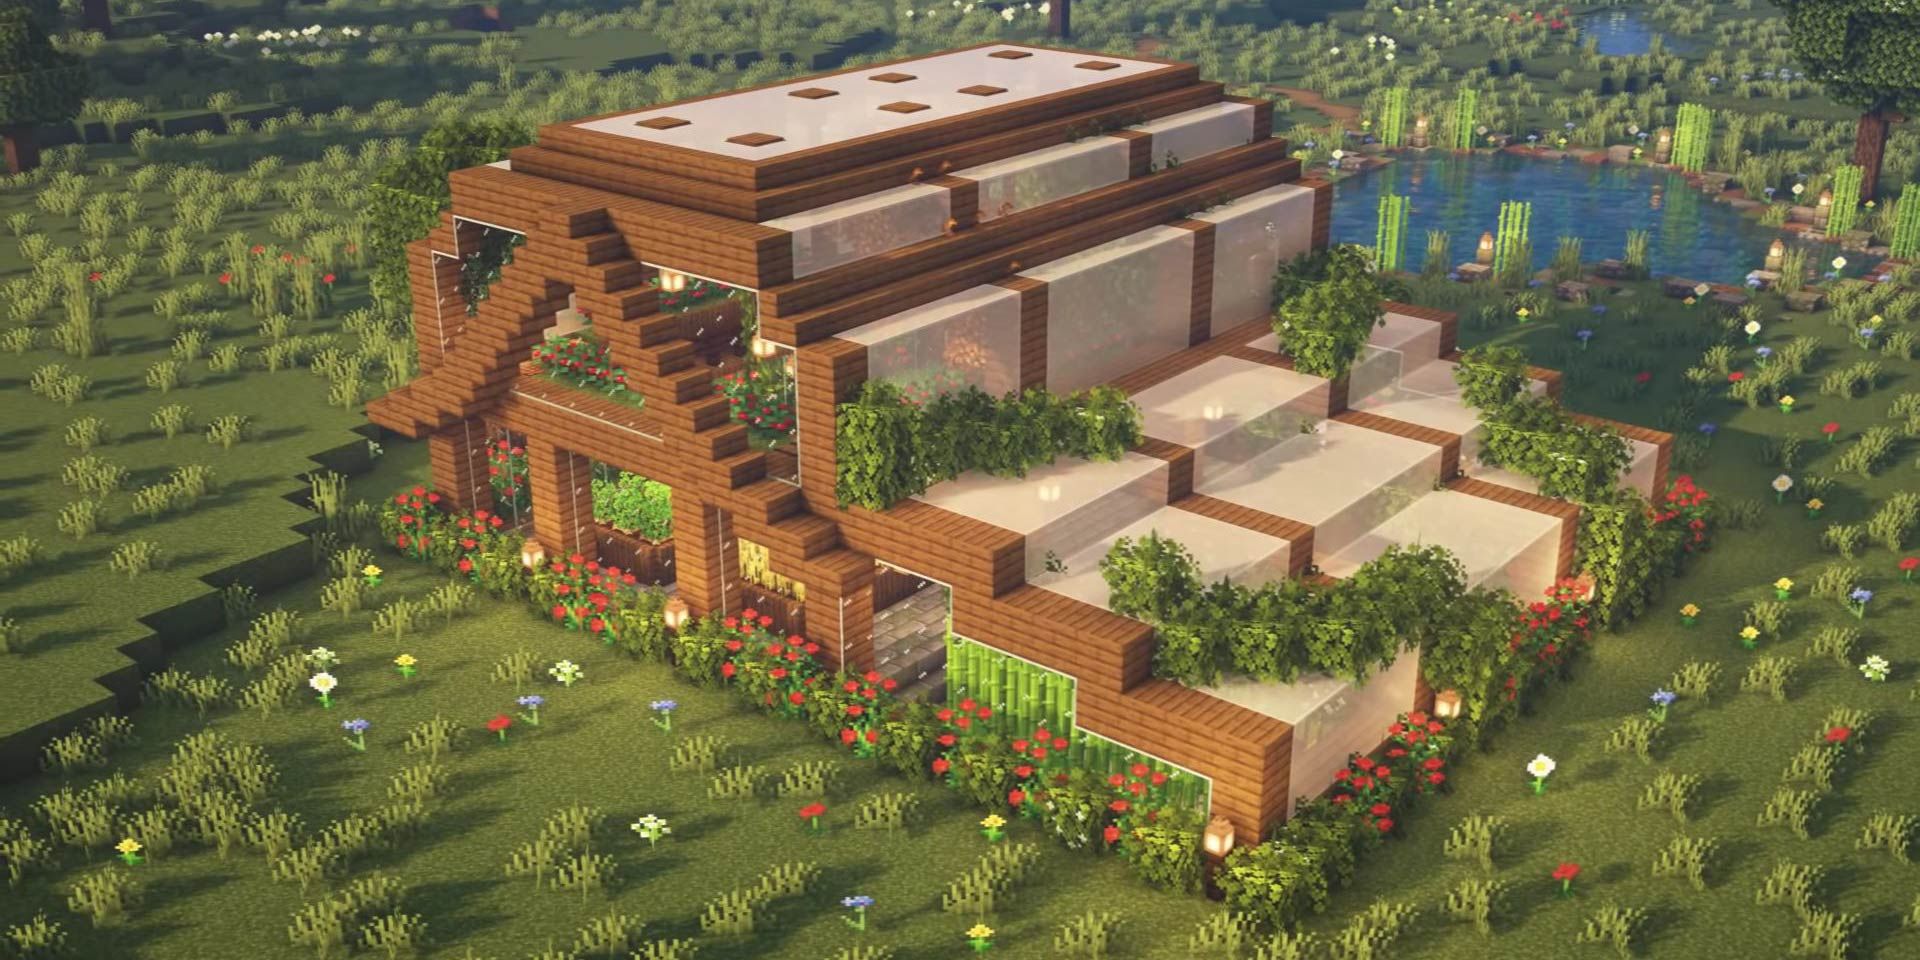 A medium-sized greenhouse in a field in Minecraft.